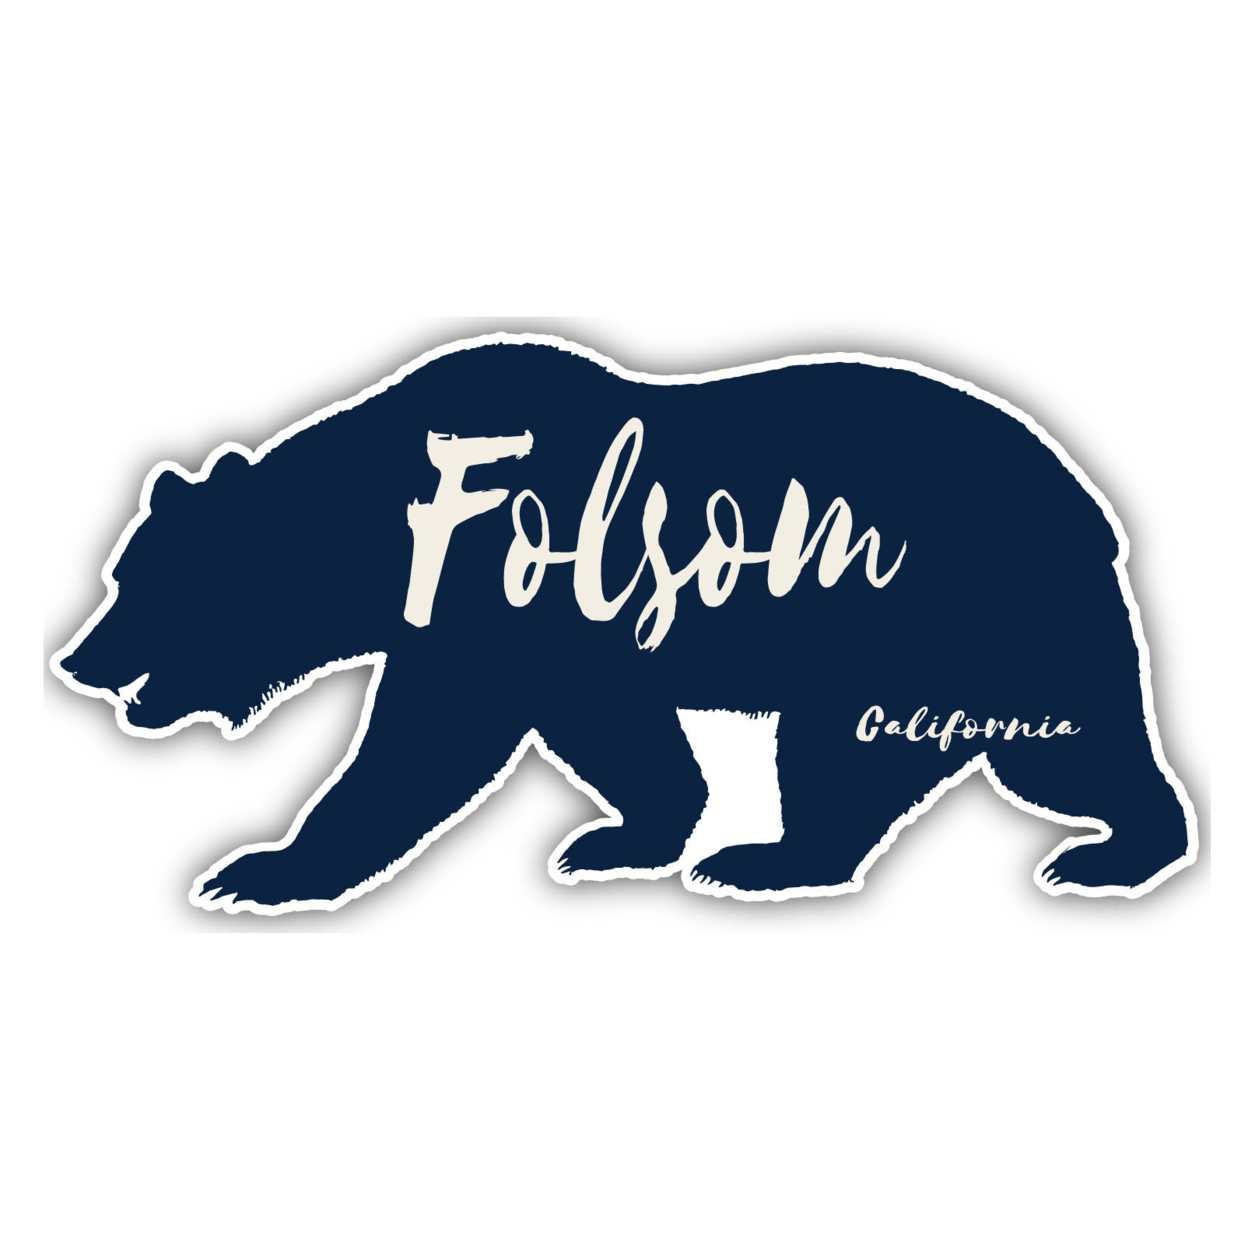 Folsom California Souvenir Decorative Stickers (Choose Theme And Size) - Single Unit, 8-Inch, Camp Life